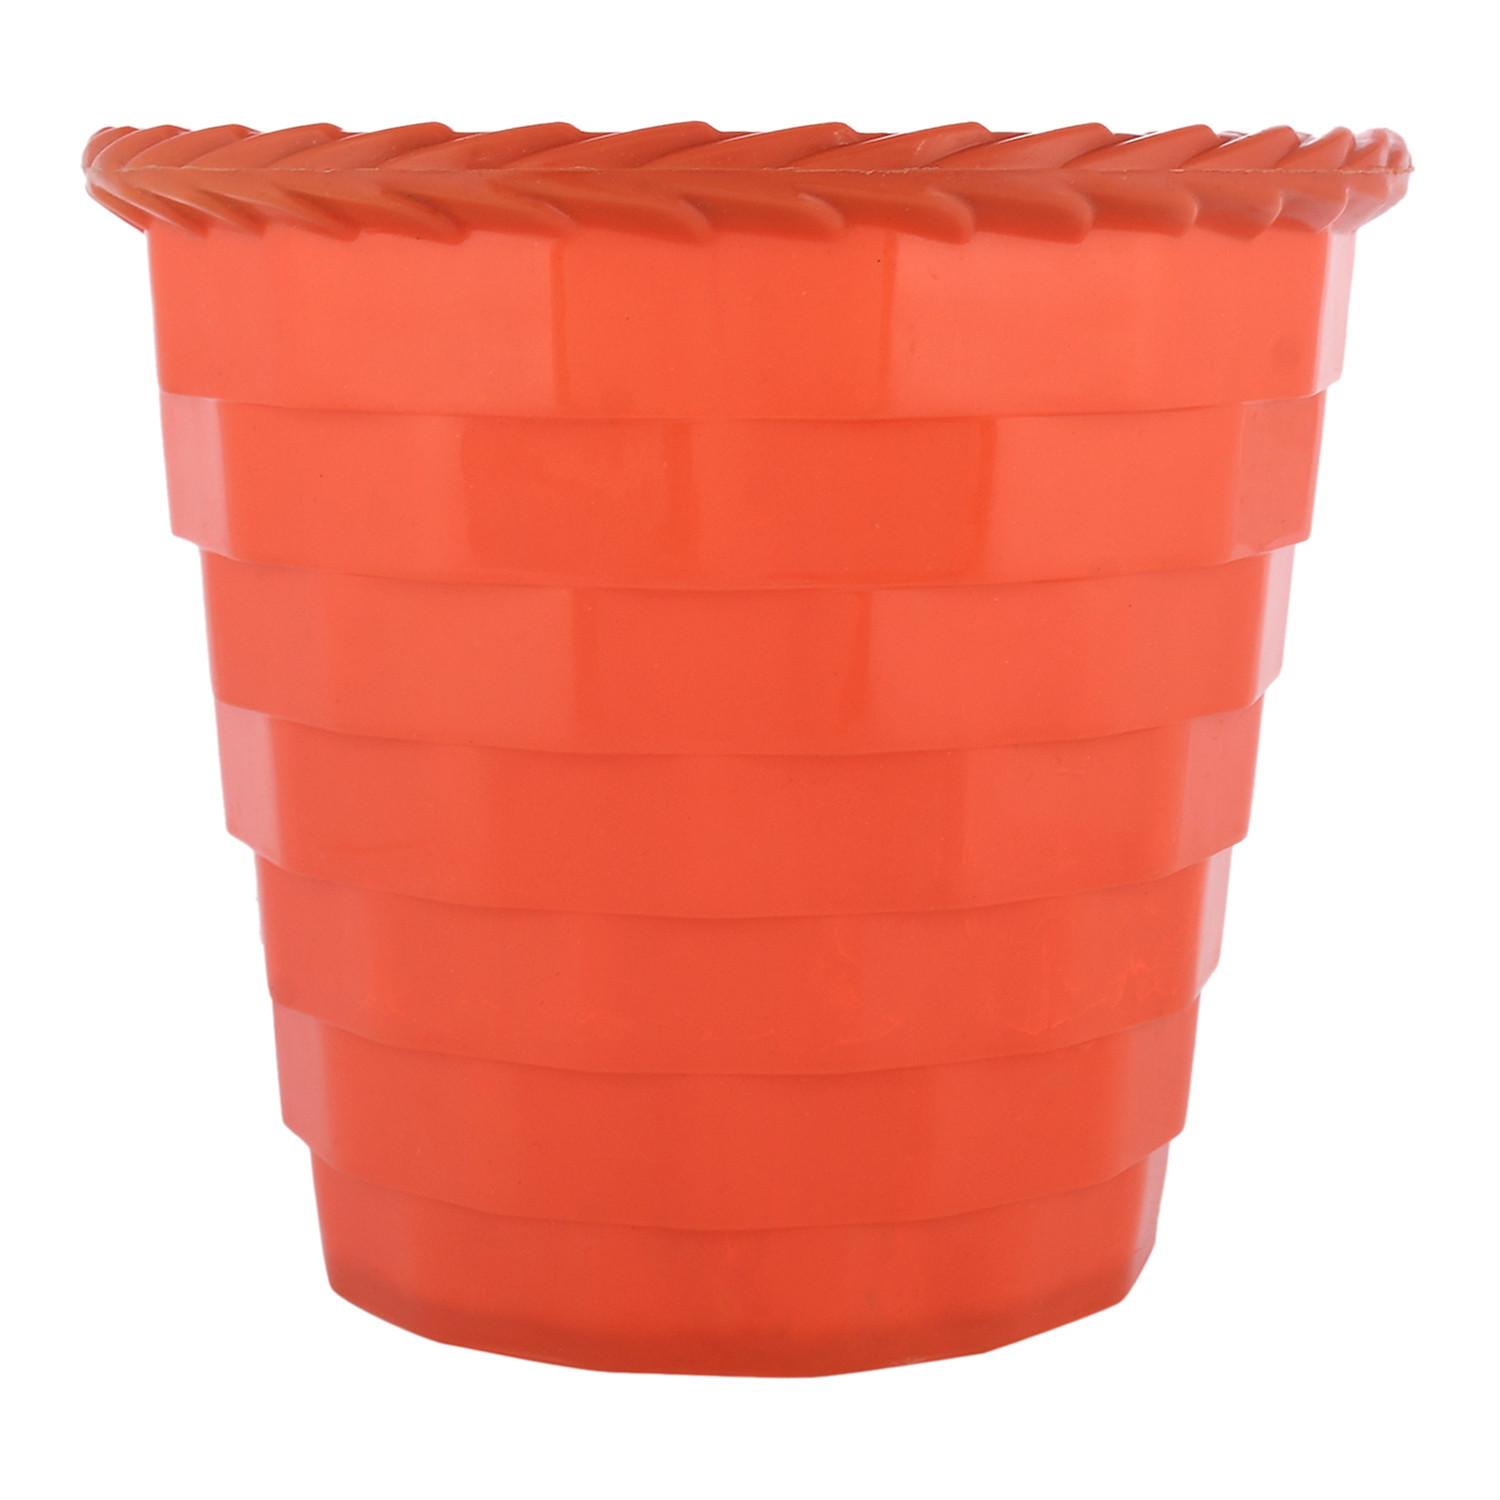 Kuber Industries Brick Flower Pot|Durable Plastic Flower Pots|Planters for Home Décor|Garden|Living Room|Balcony|6 Inch|Pack of 3 (Multicolor)